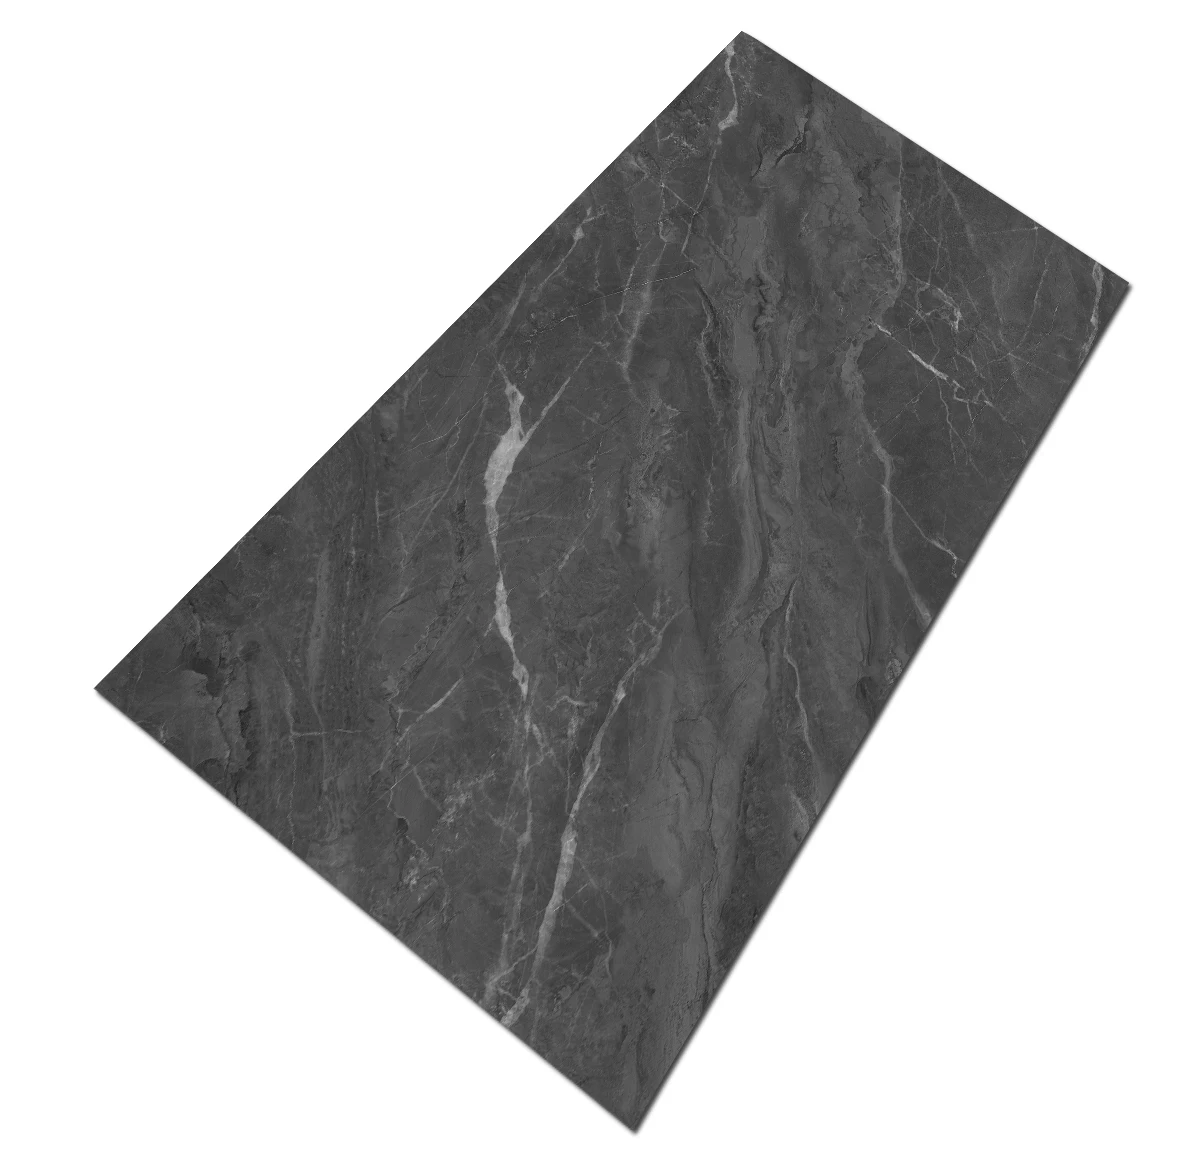 Dark grey ceramic tile production line travertine tile SAPT15014